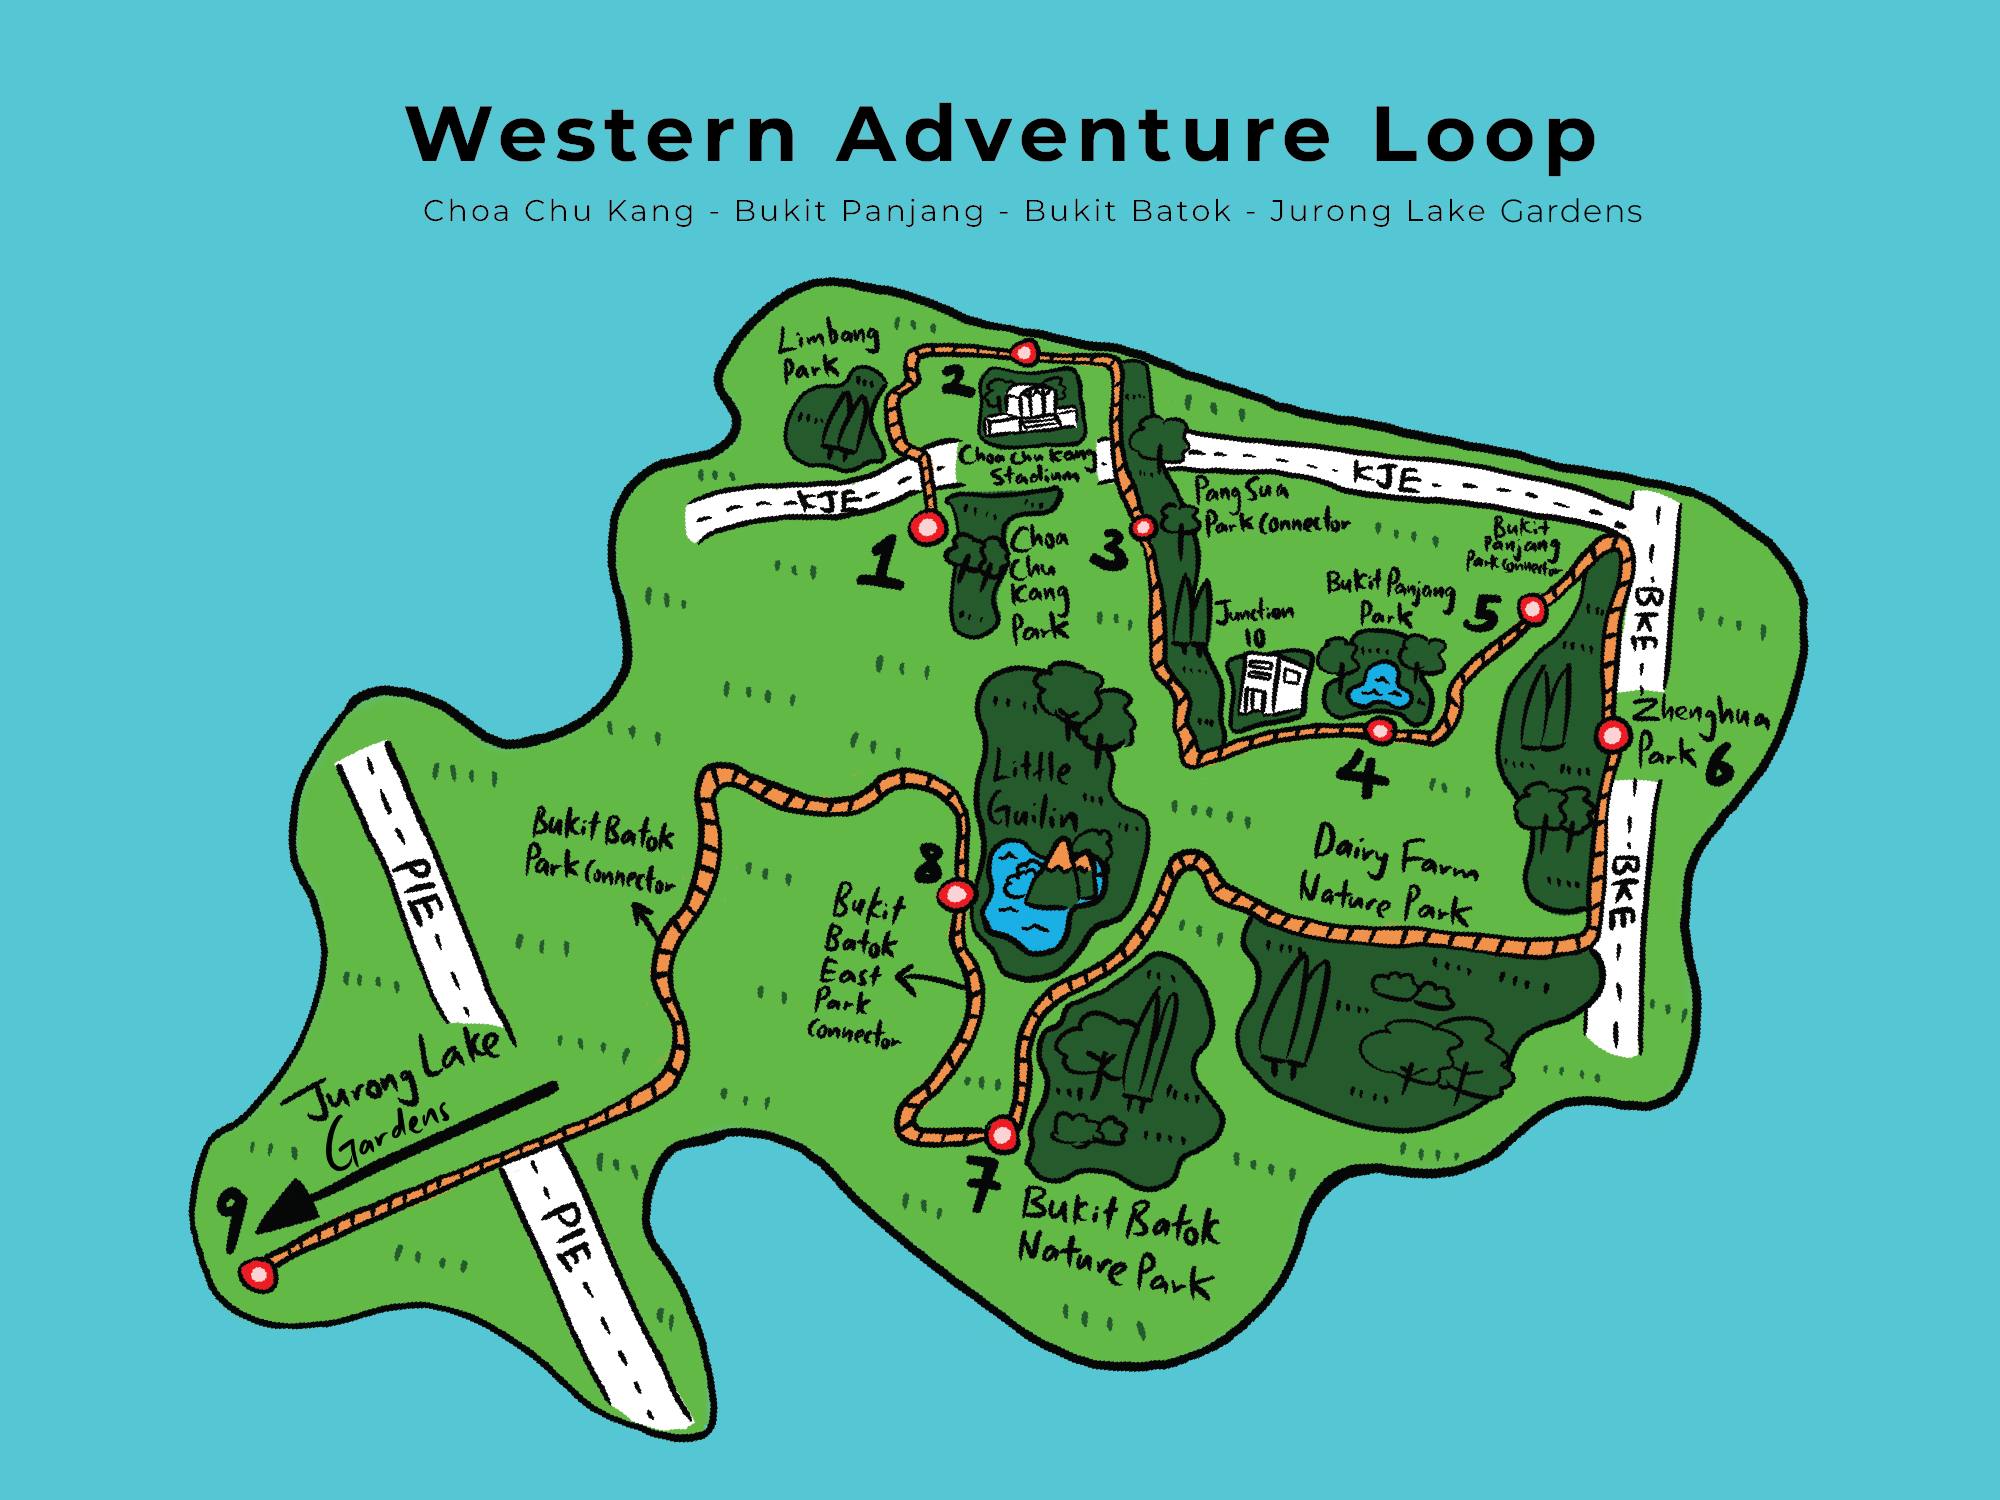 Western Adventure Loop around The Reserve Residences